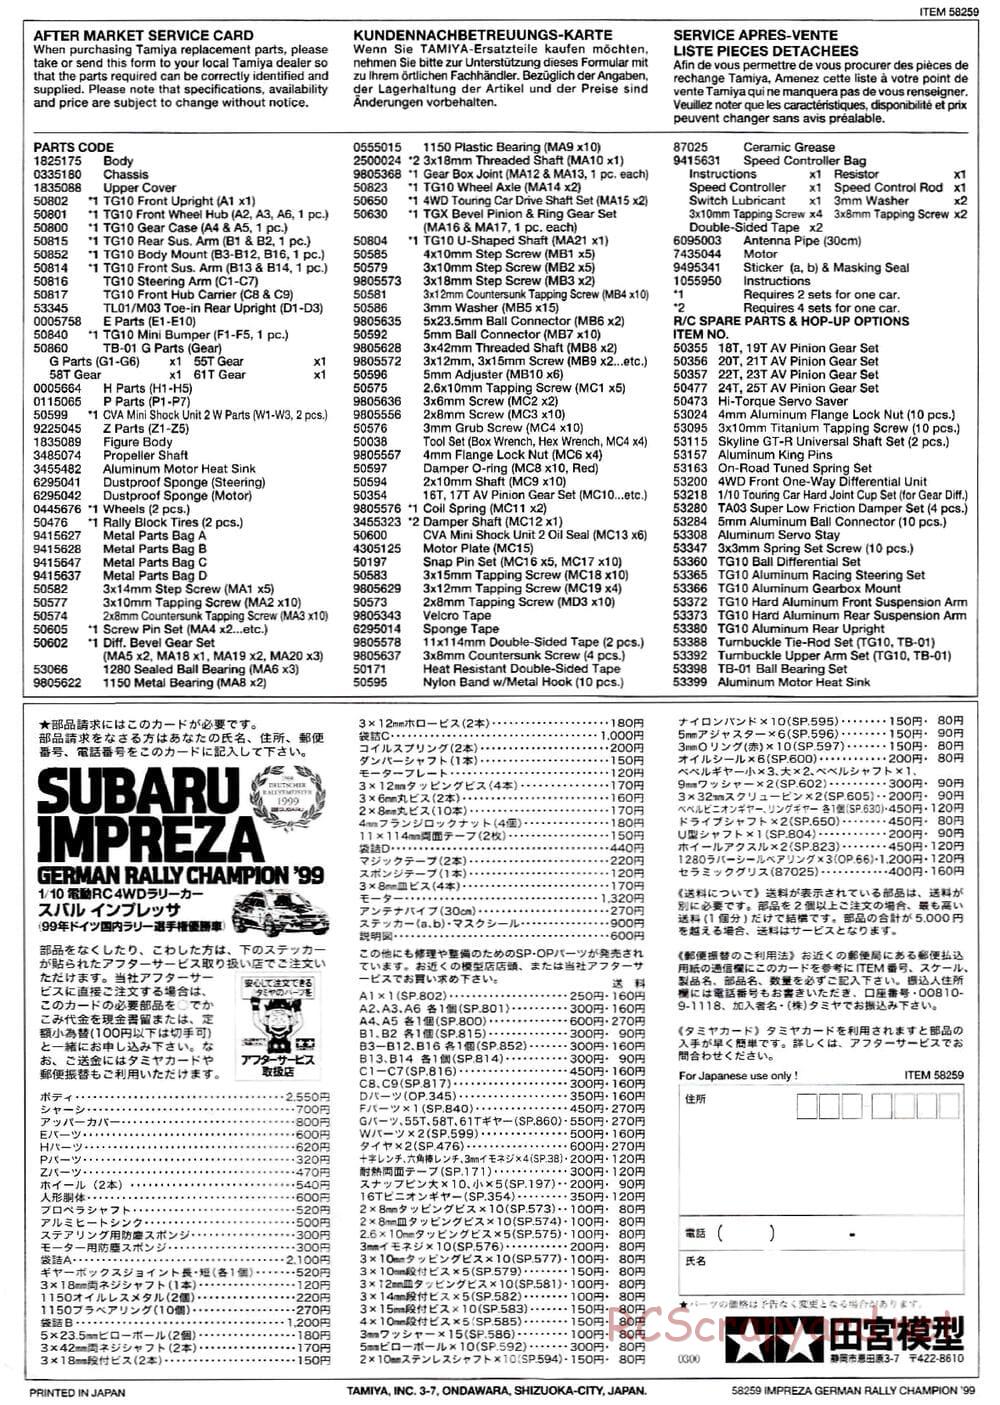 Tamiya - Subaru Impreza German Rally Champion 99 - TB-01 Chassis - Manual - Page 25